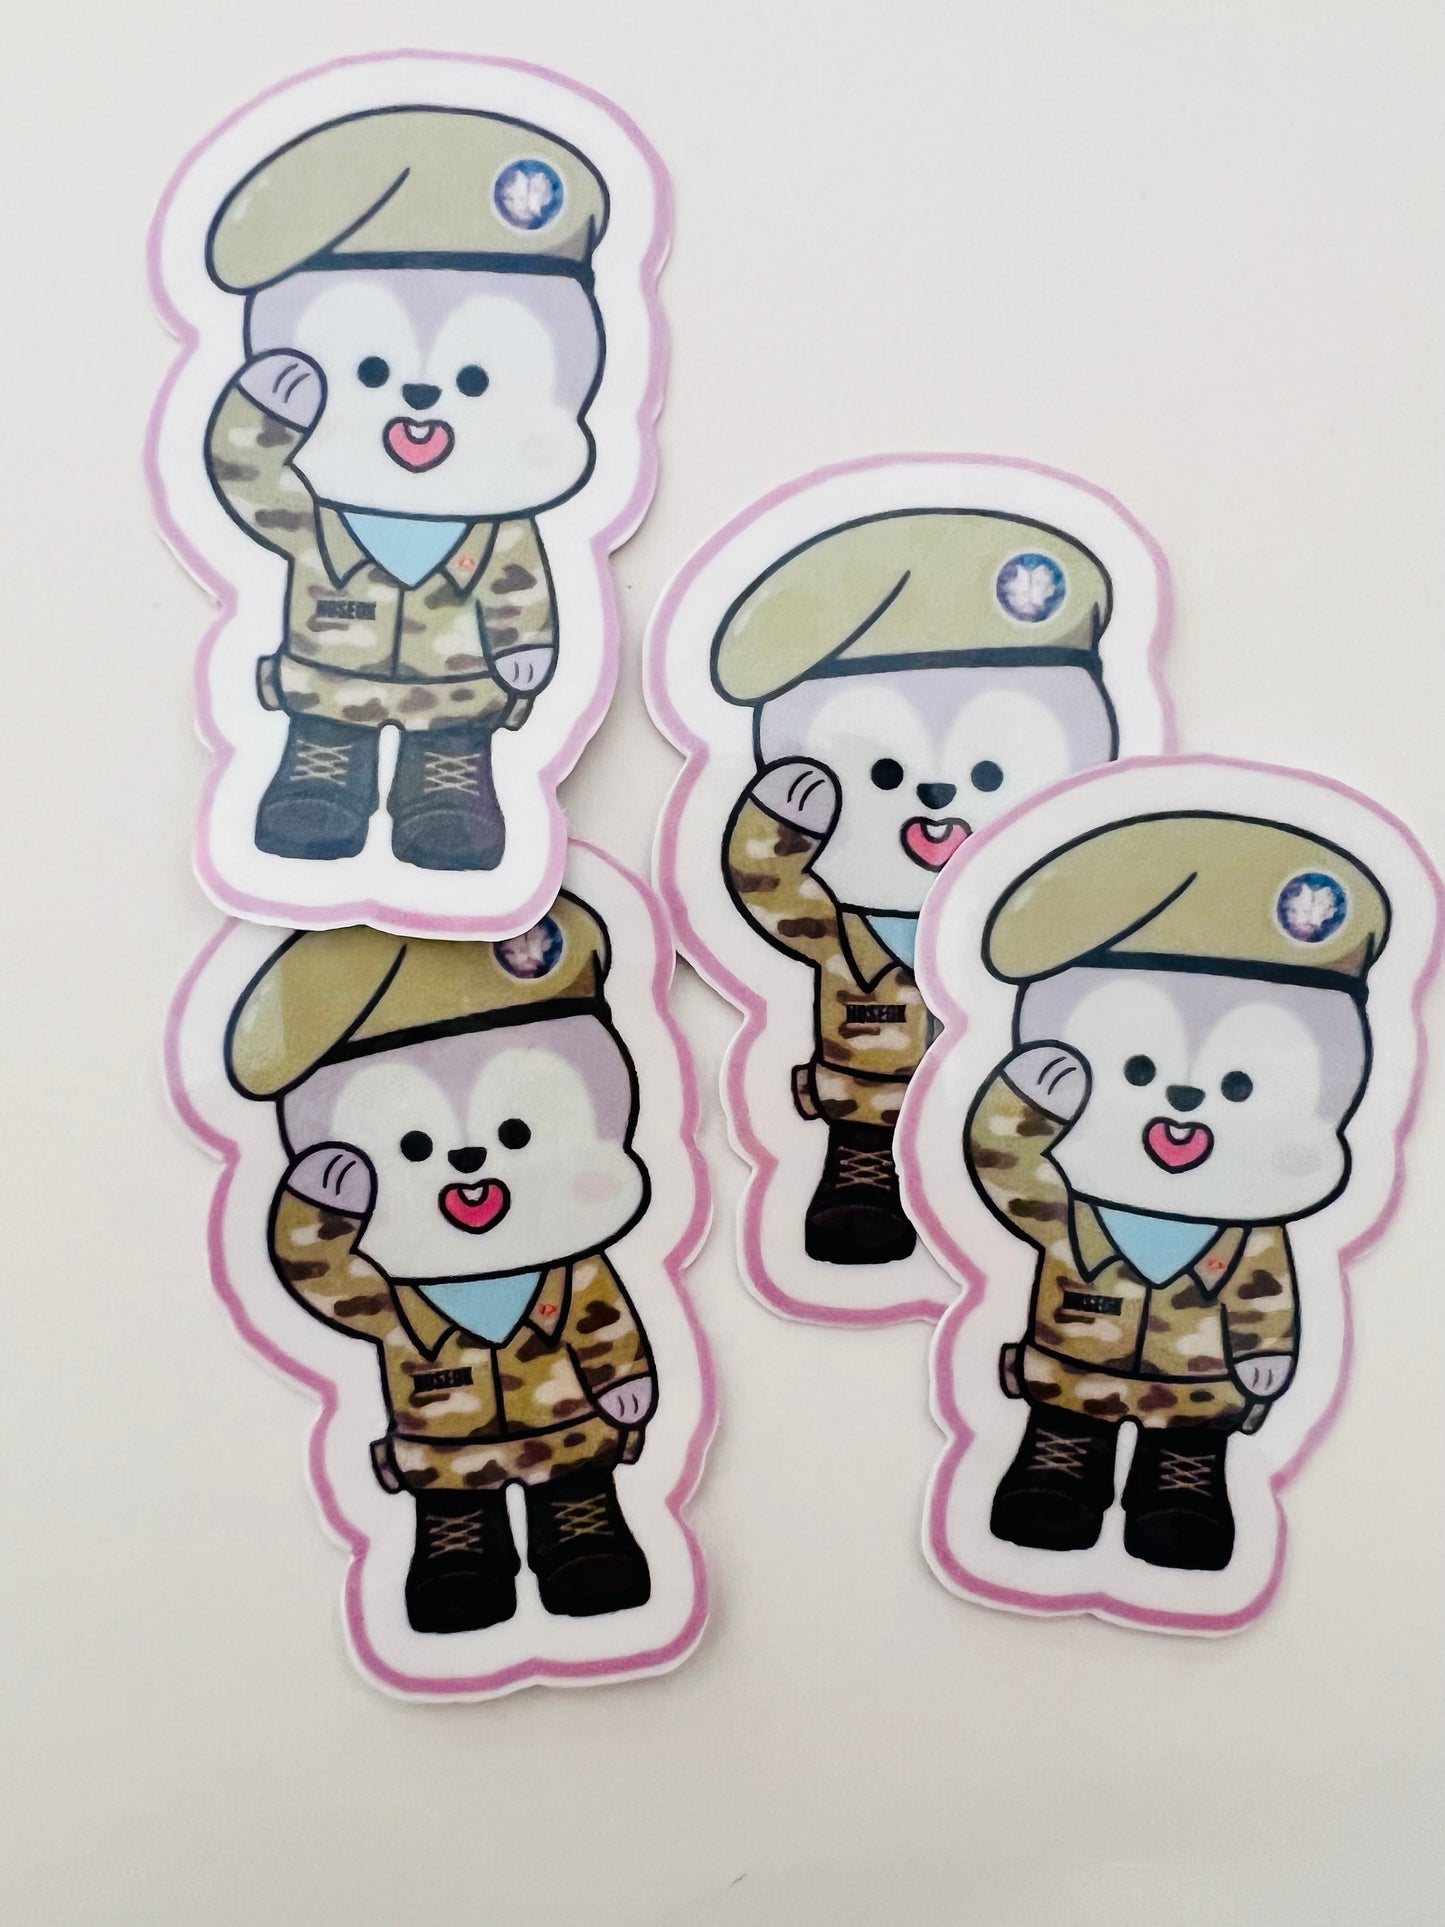 Kpop Stickers